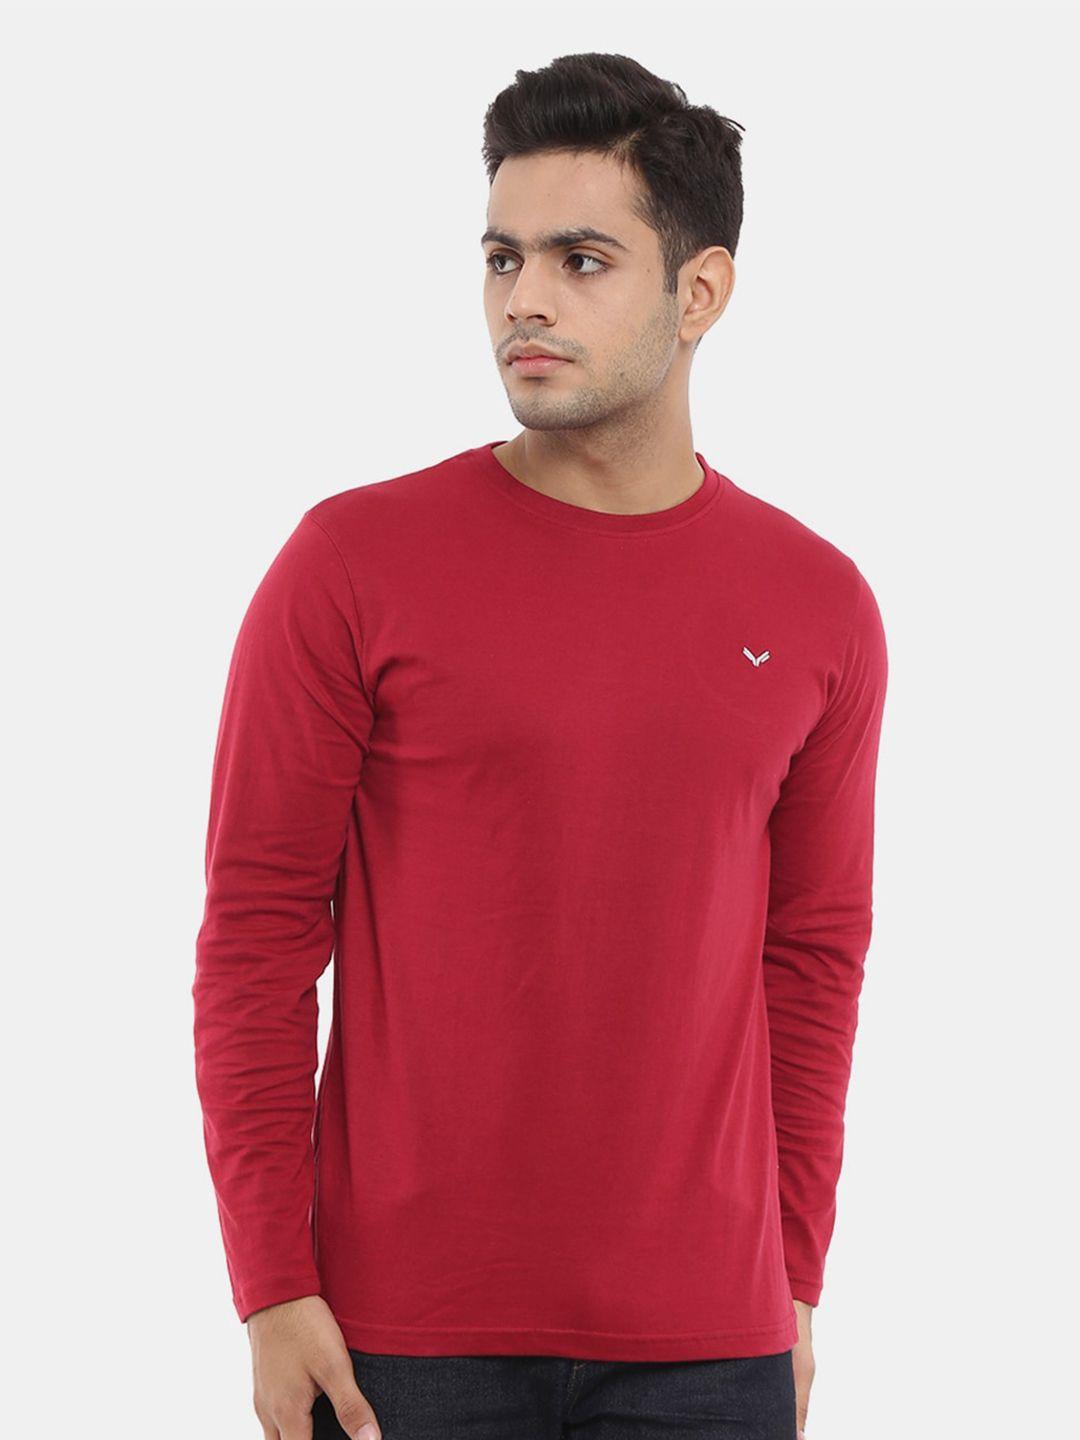 v-mart men maroon cotton slim fit t-shirt